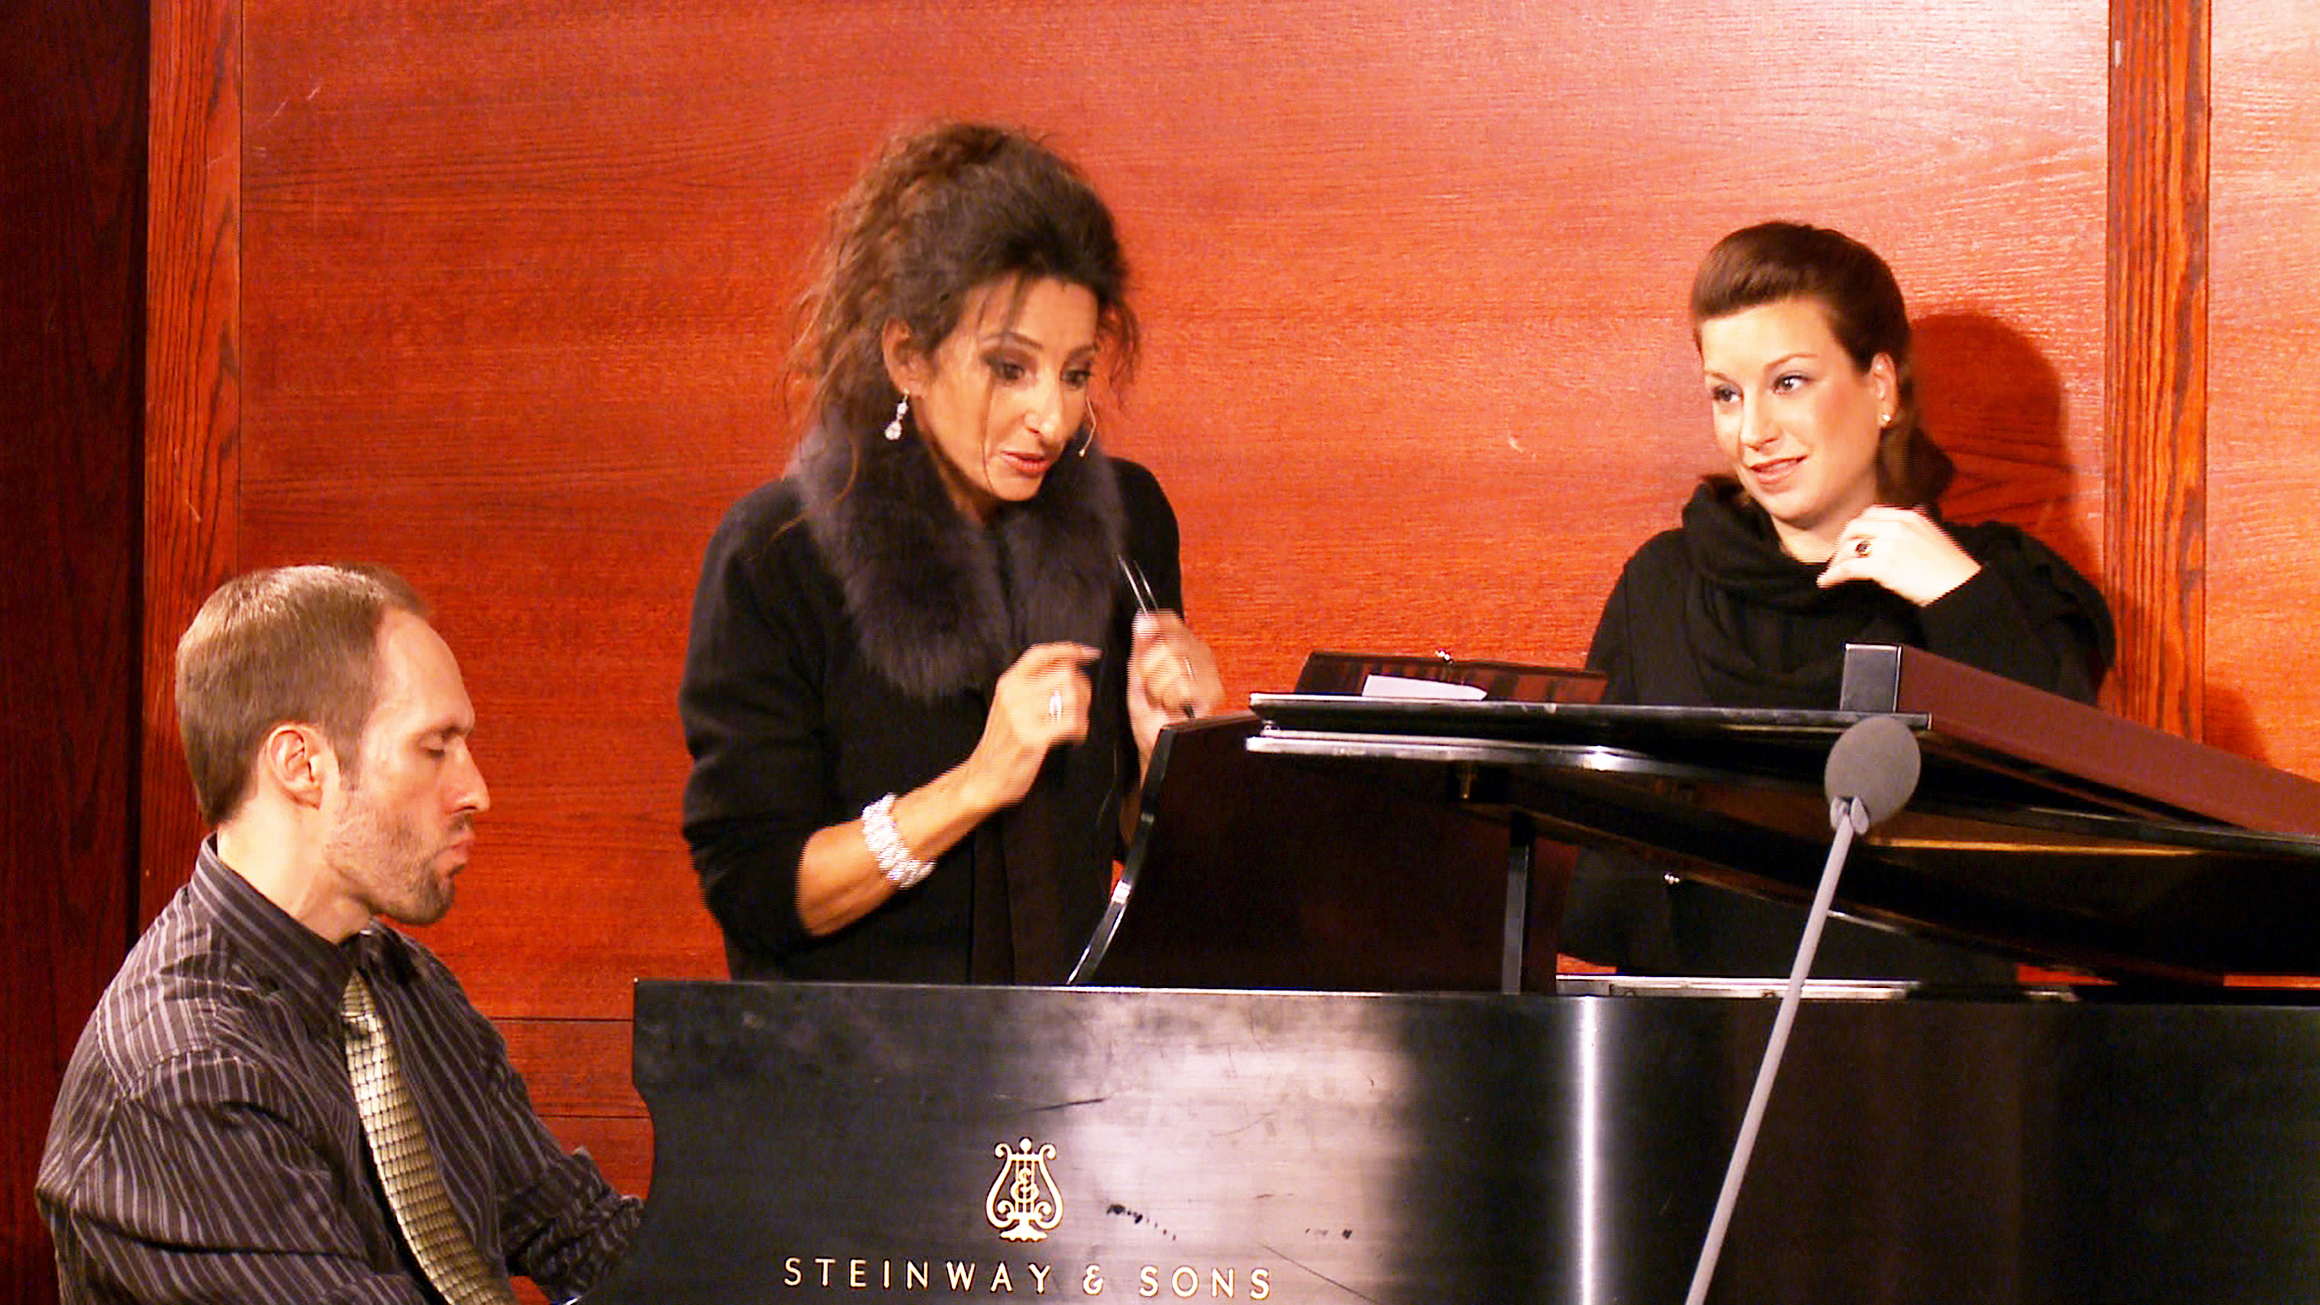 Lucia Aliberti with the friend Bernadette Herzog⚘Masterclass⚘Carnegie Hall⚘New York⚘Rehearsals⚘:http://www.luciaaliberti.it #luciaaliberti #bernadetteherzog #masterclass #carnegiehall #newyork #rehearsals